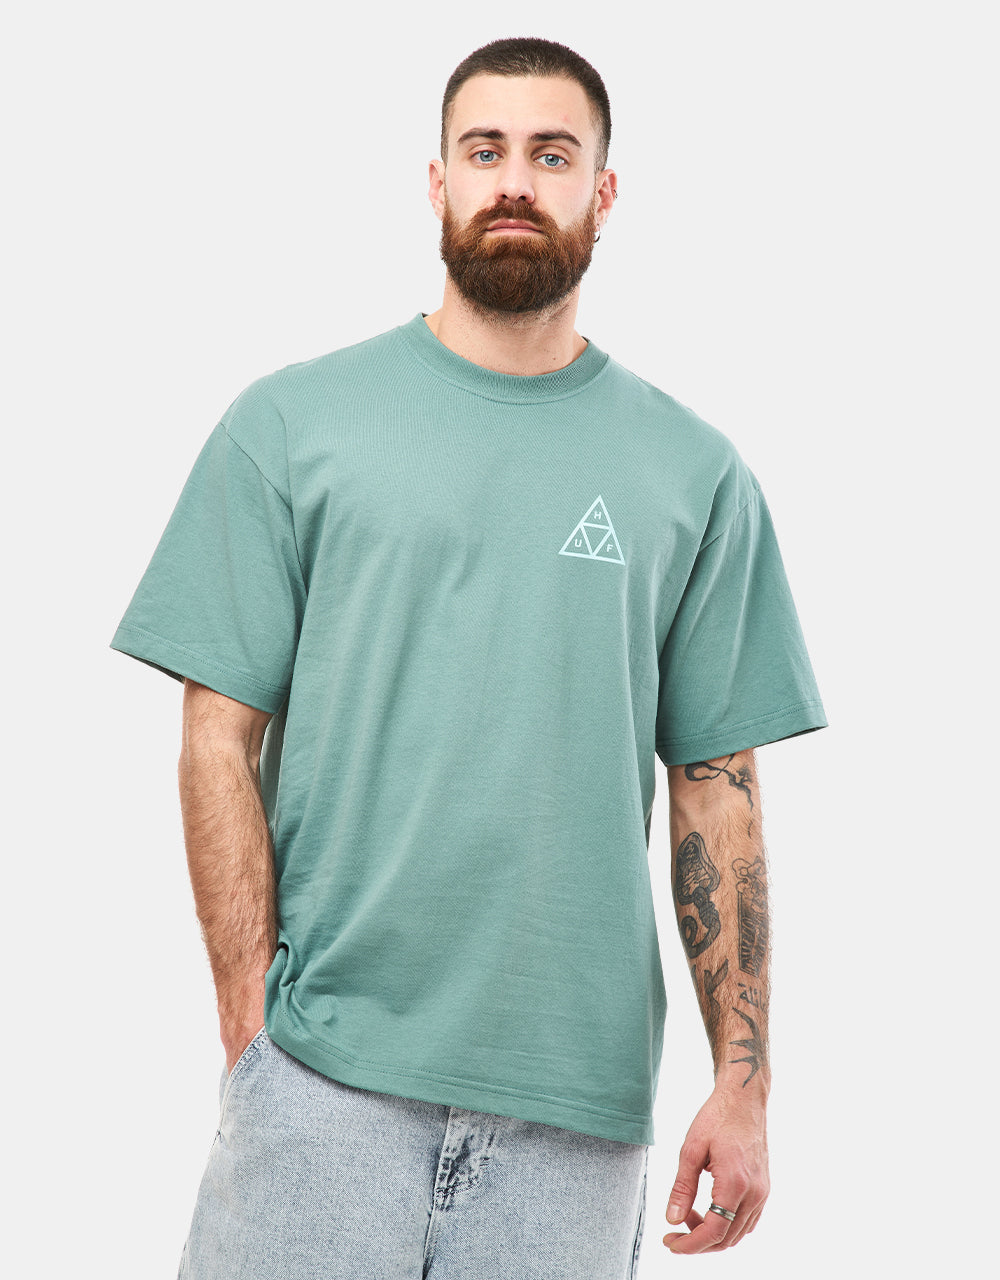 HUF Triple Triangle T-Shirt - Military Green